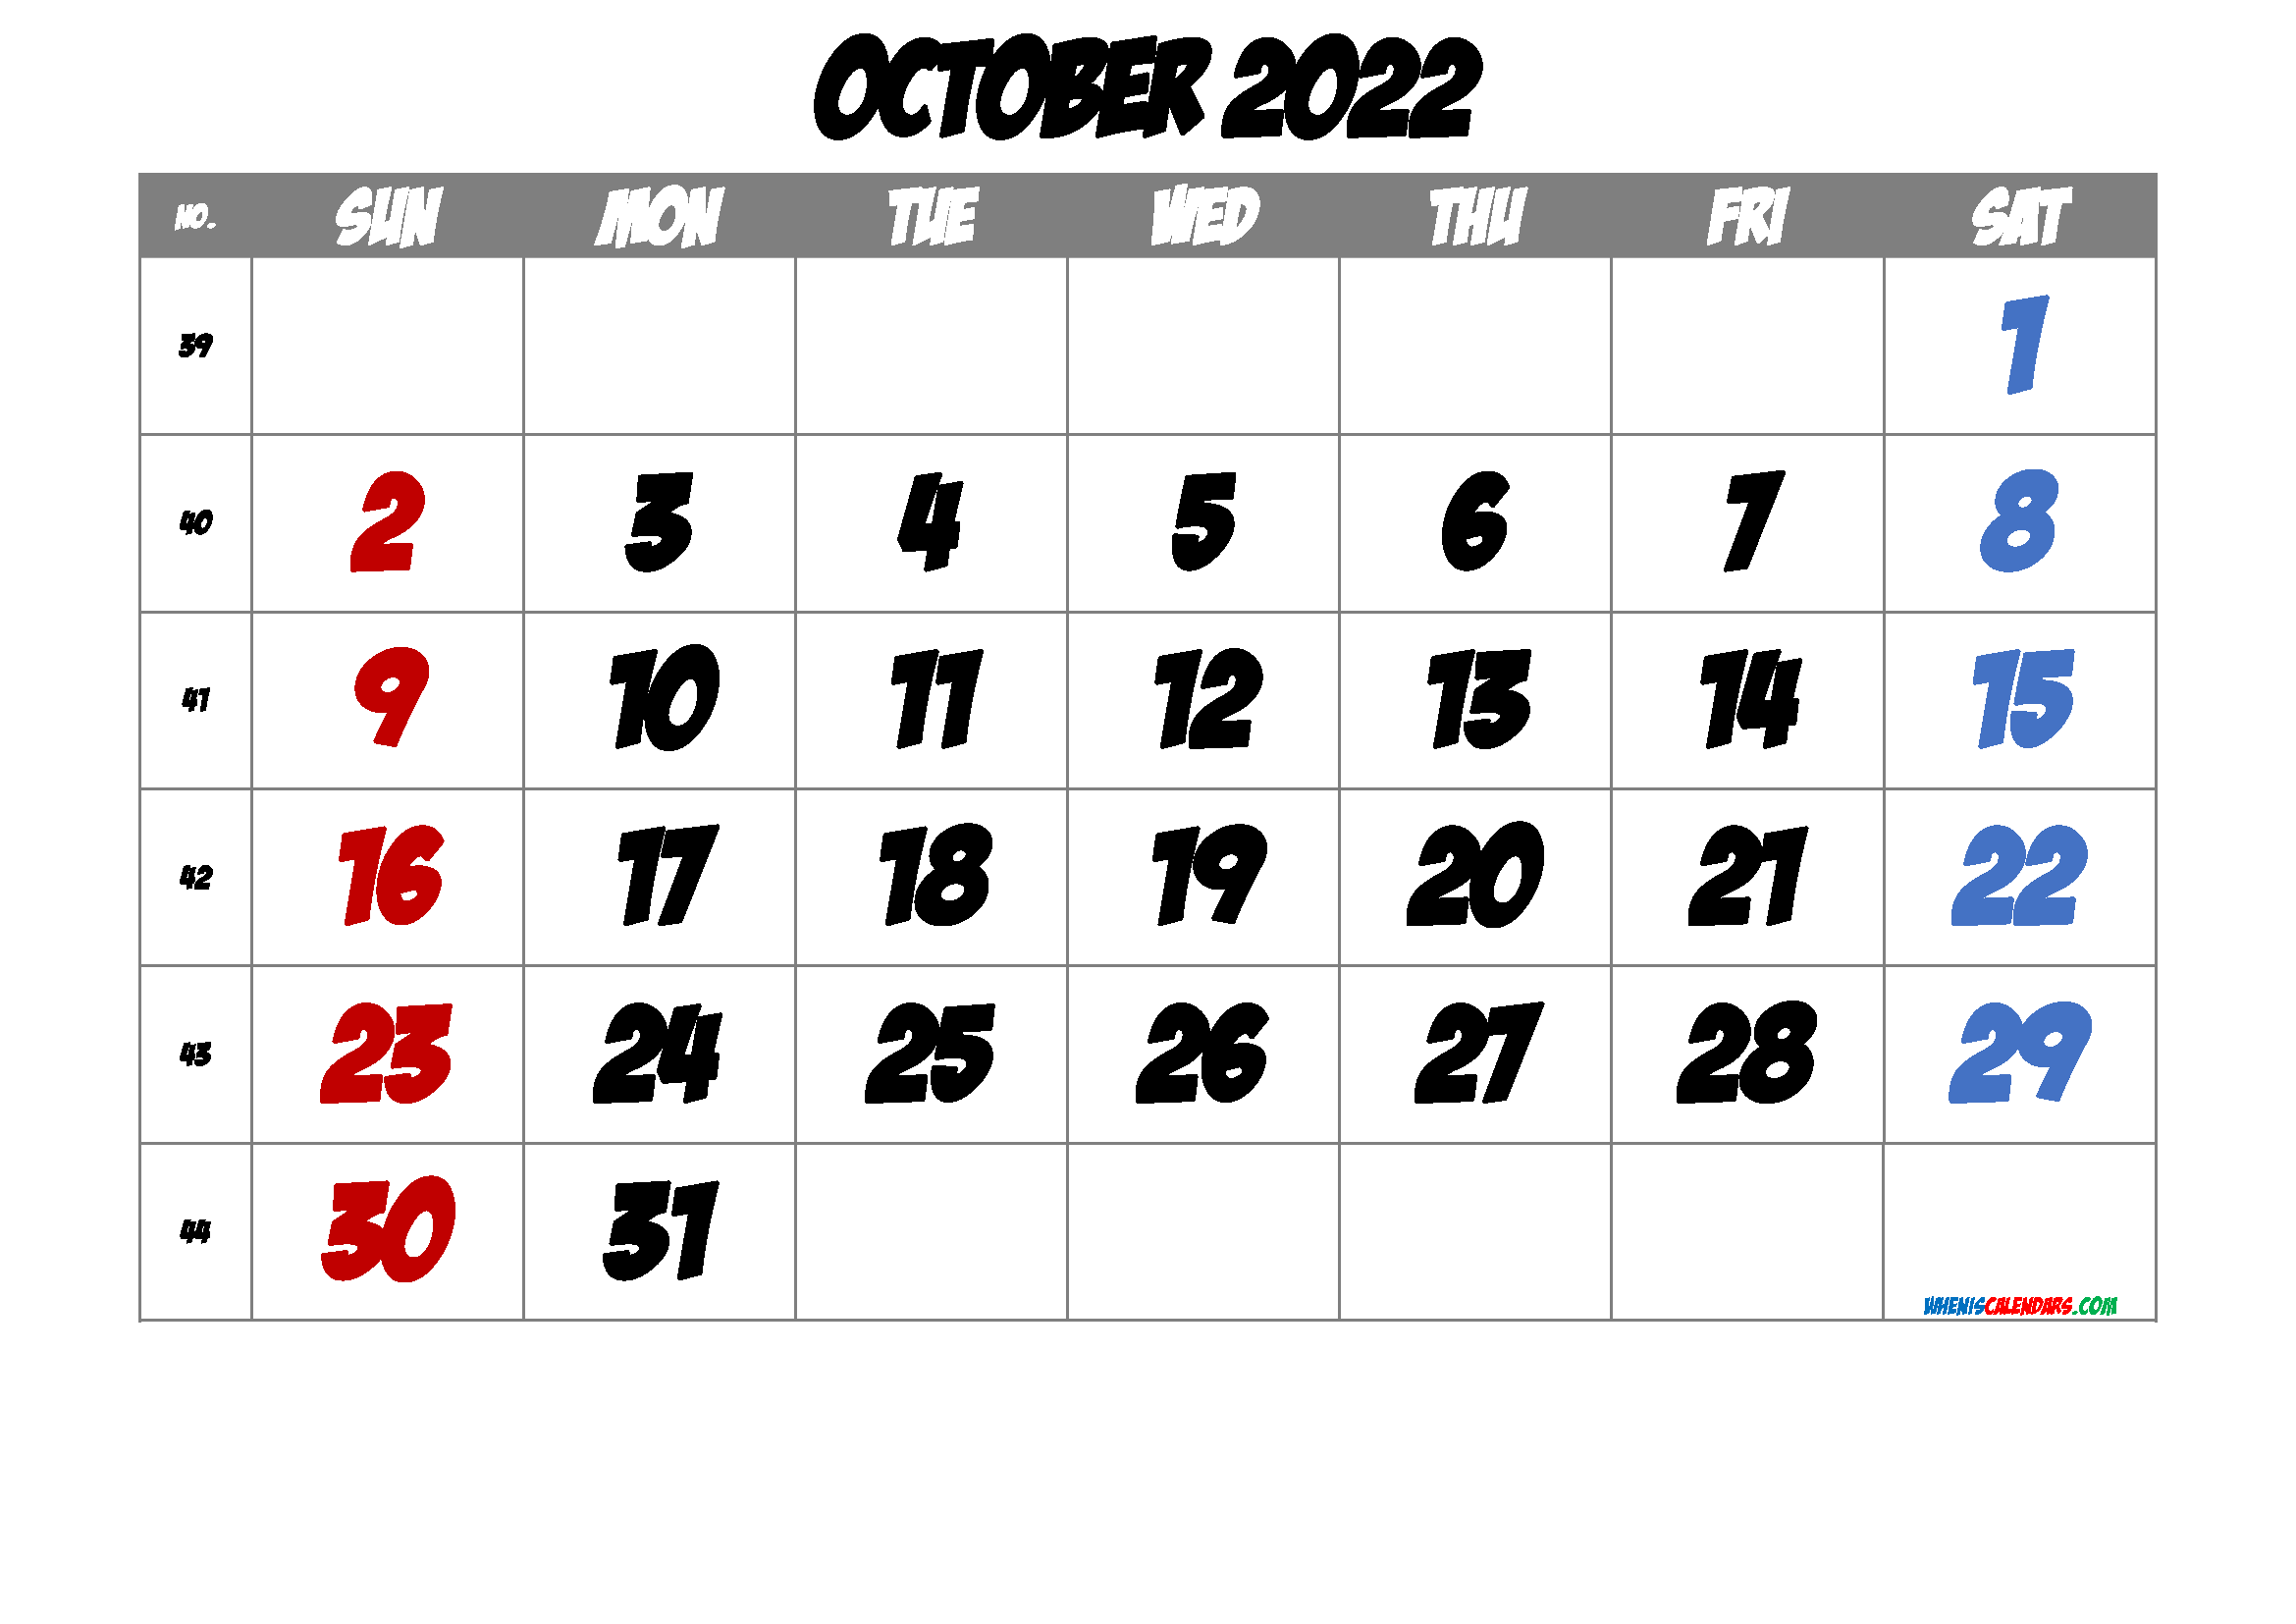 2022 October Free Printable Calendar